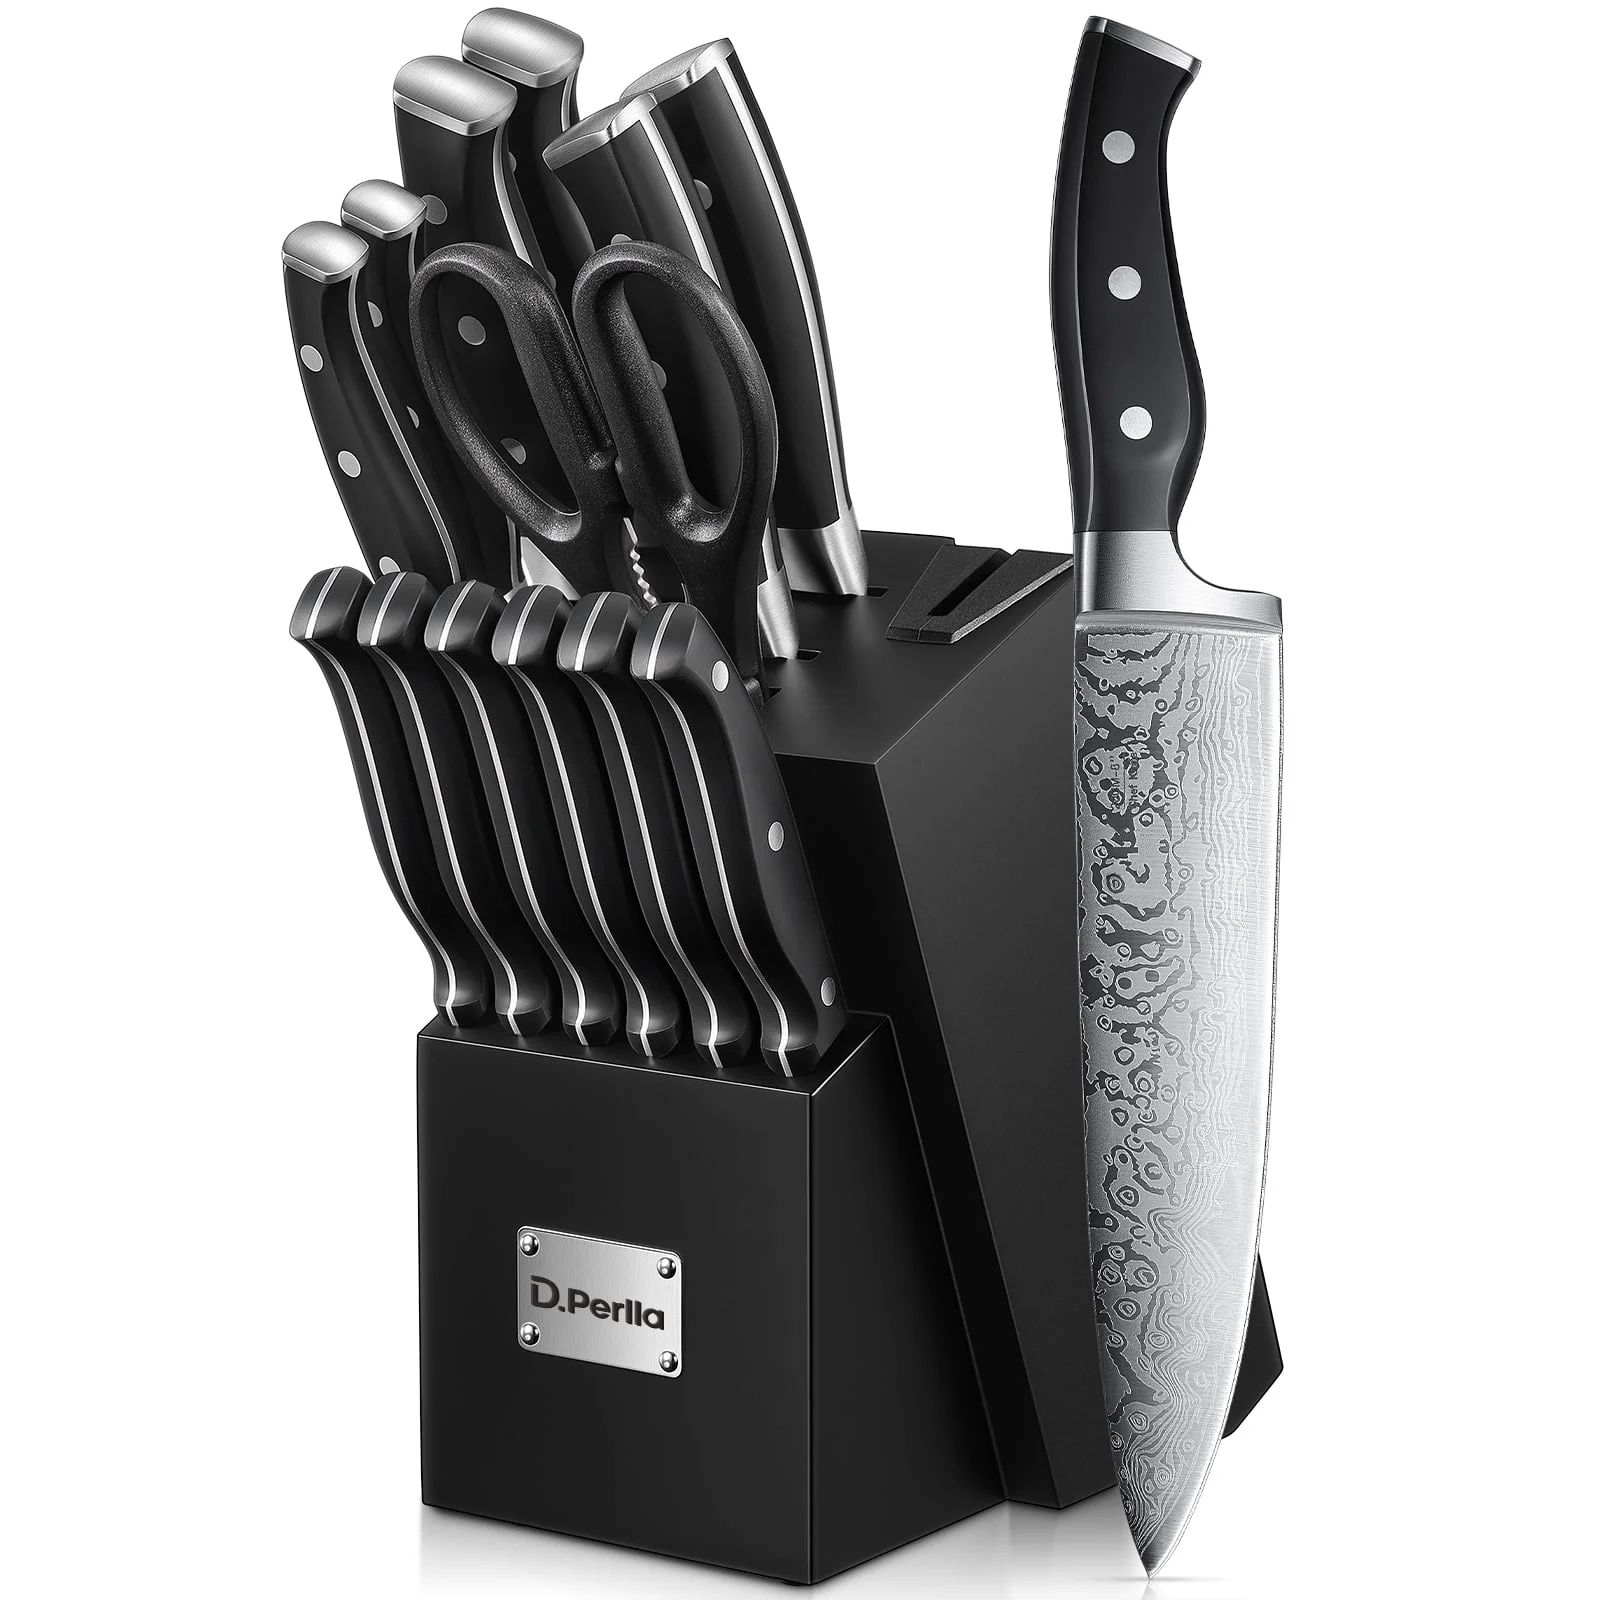 D.Perlla Knife Set, 14PCS German Stainless Steel Kitchen Knives Block Set with Built-in Sharpener... | Walmart (US)